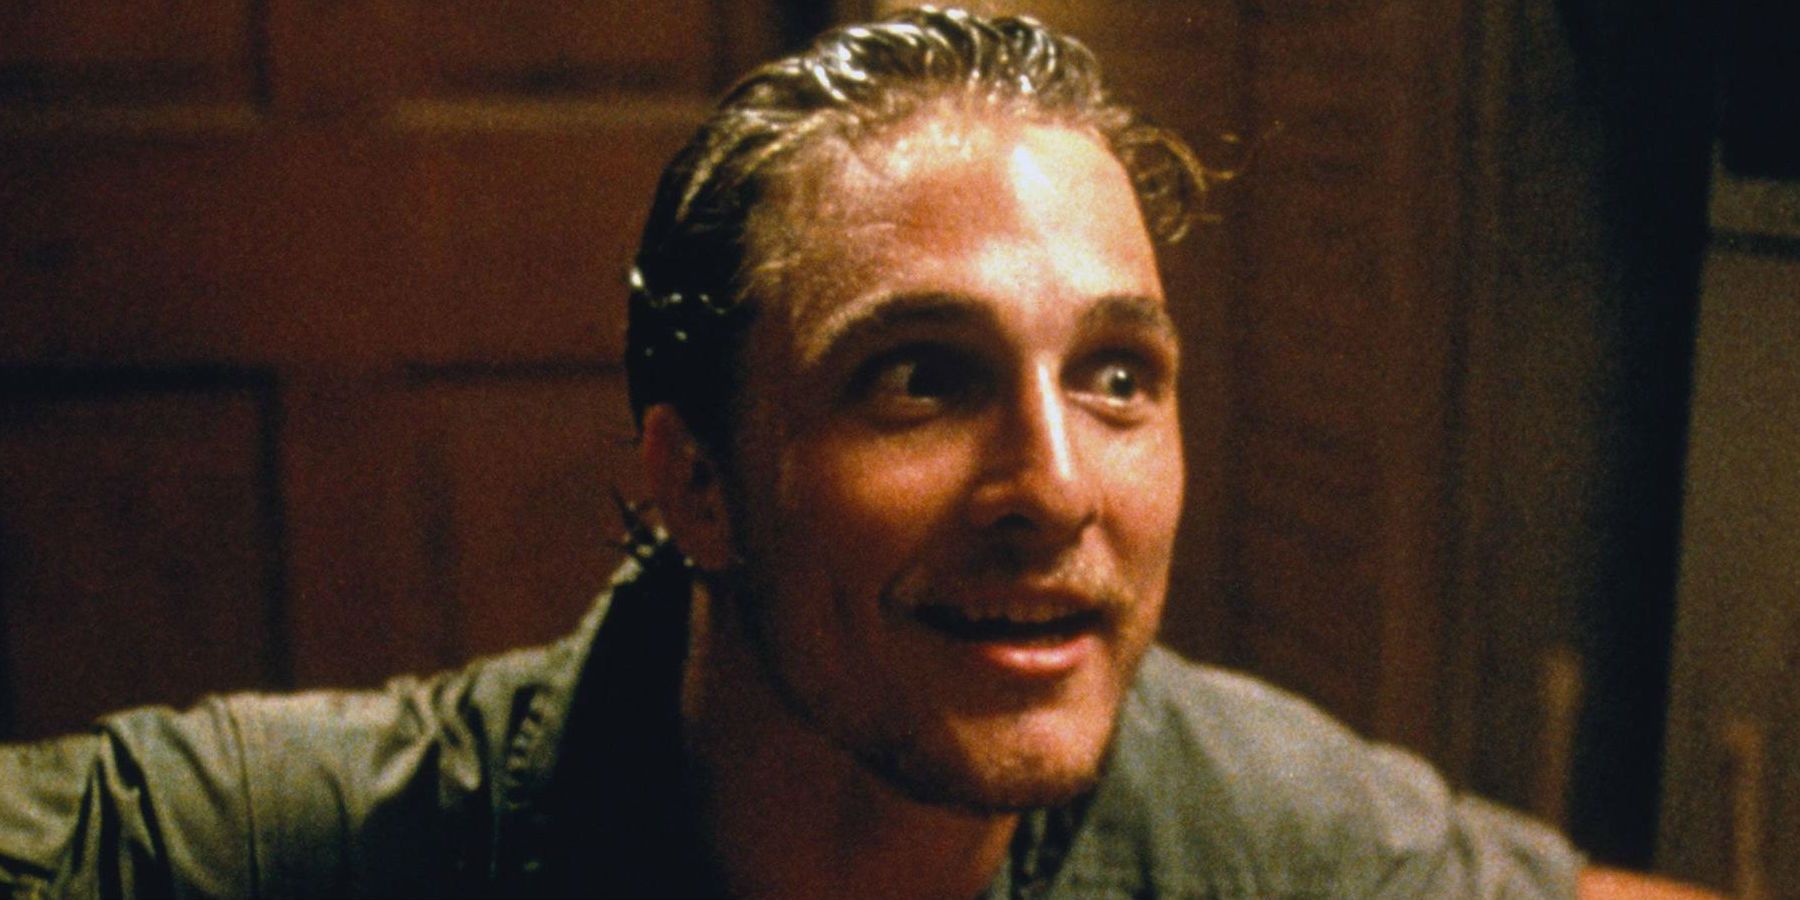 Matthew McConaughey in Texas Chainsaw Massacre 4 The Next Generation